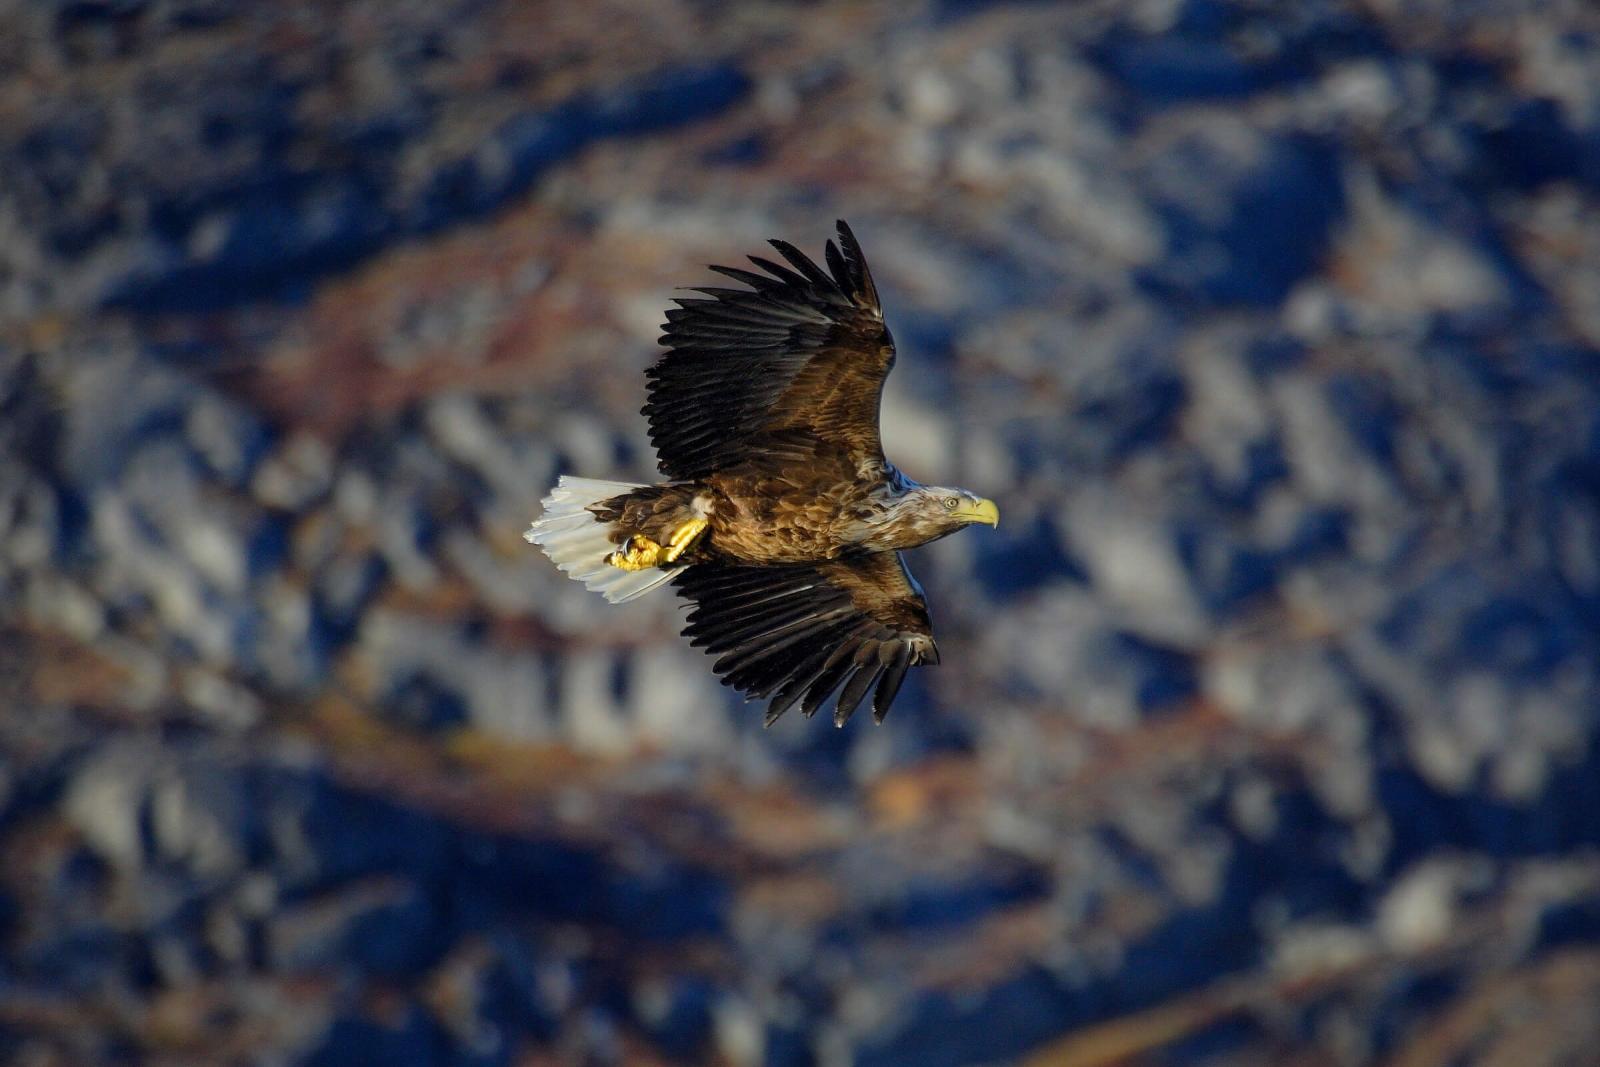 Sea eagle flying low. Photo by Aqqa Rosing Asvid.